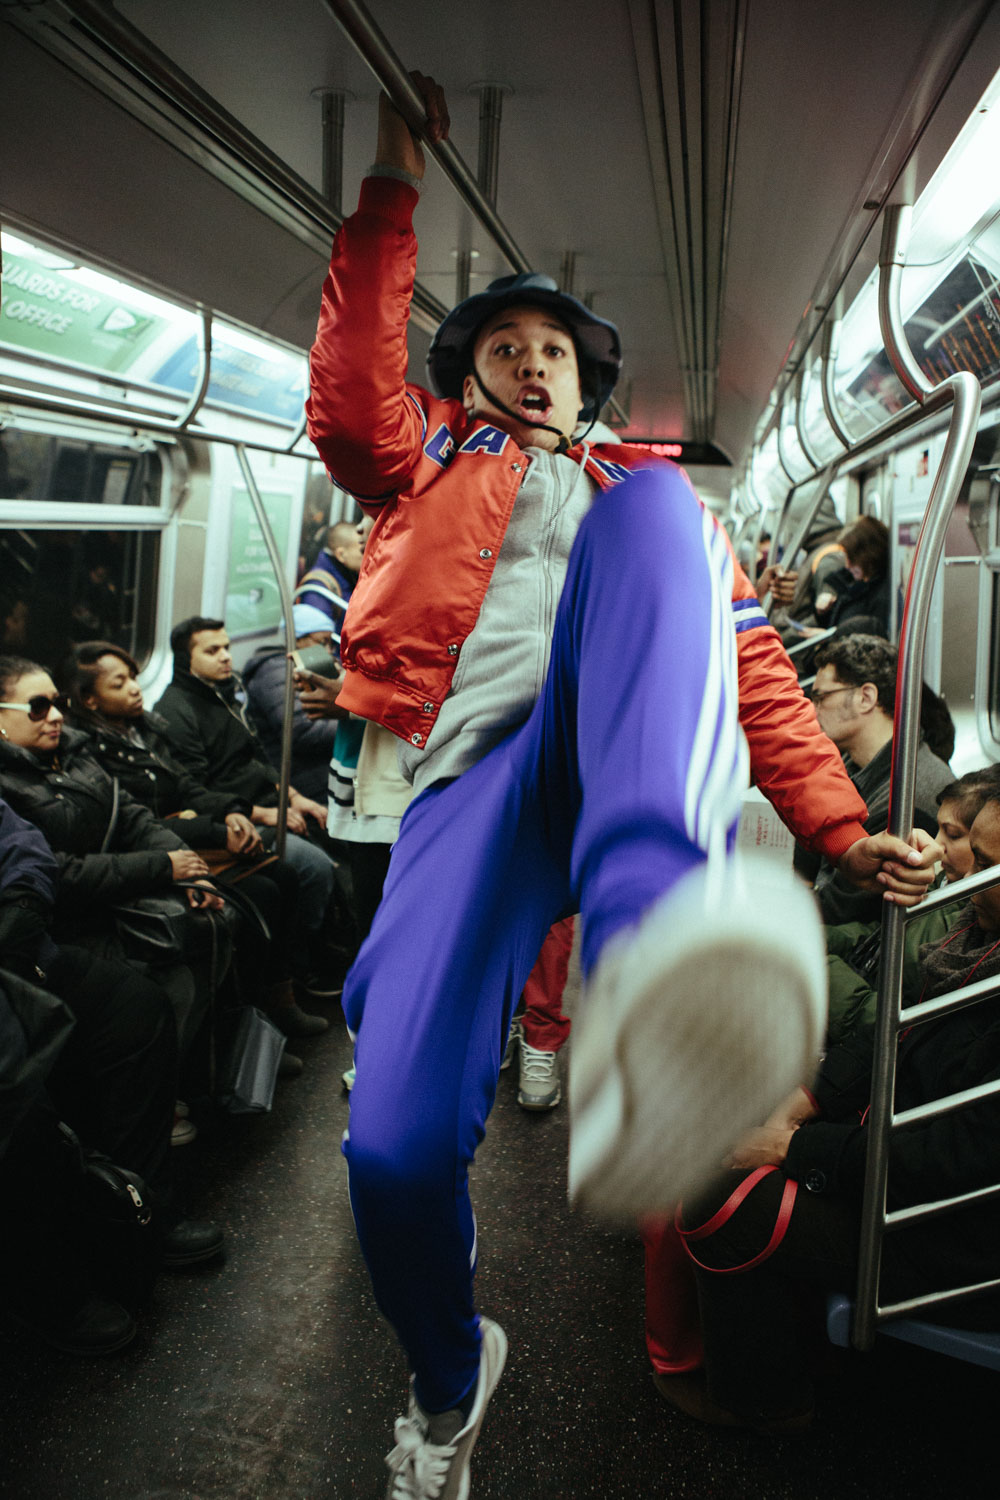 House of Marley Subway Dancers by Harrison Boyce